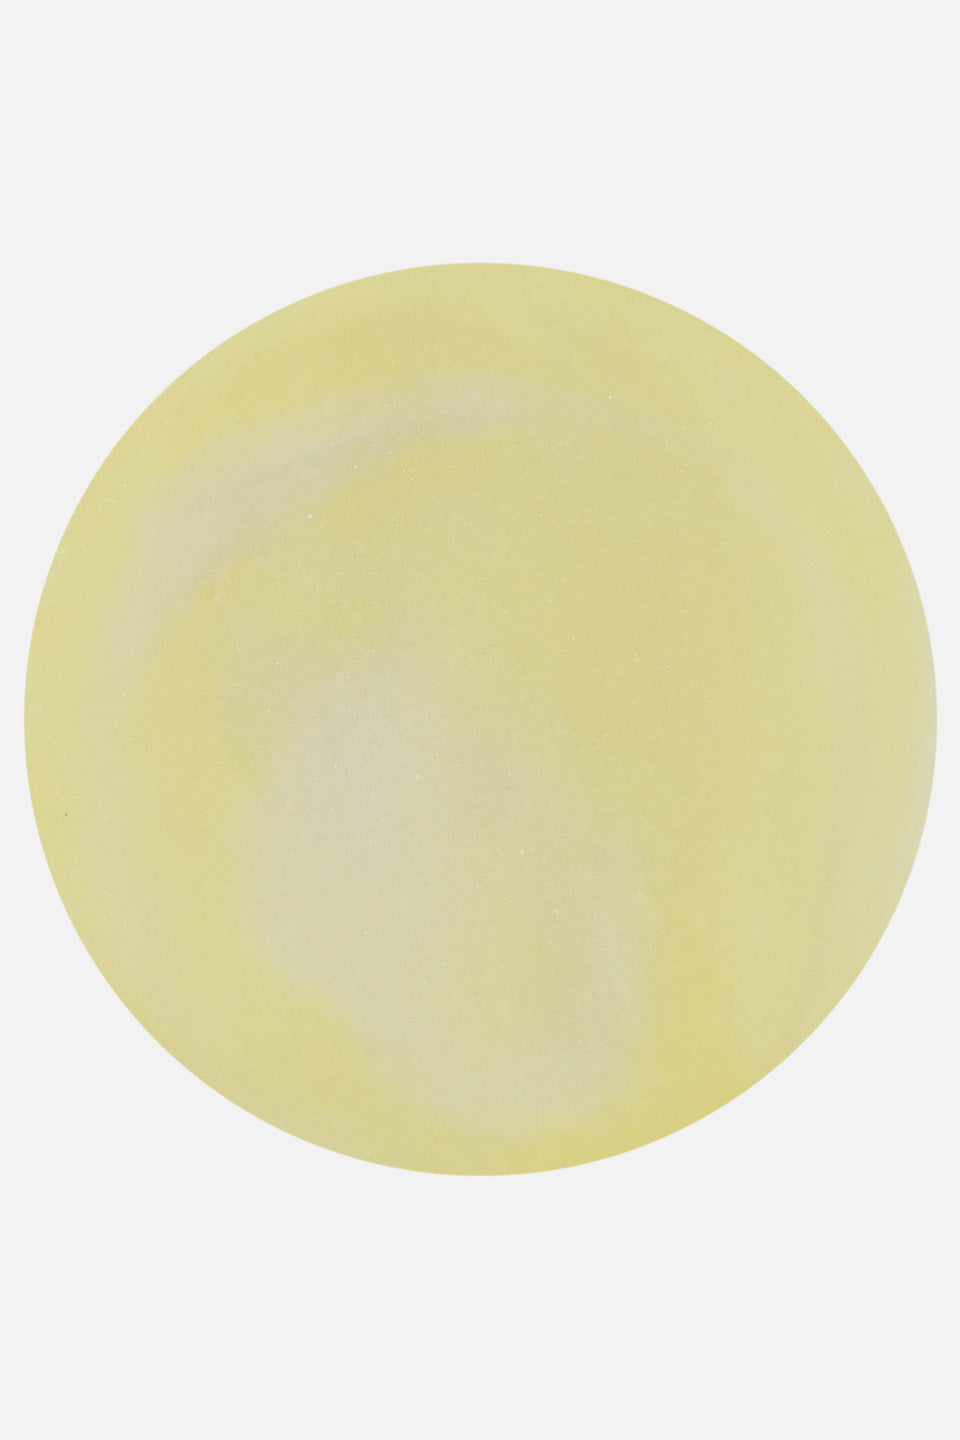 Polvere acrilica giallo pastello 5 g